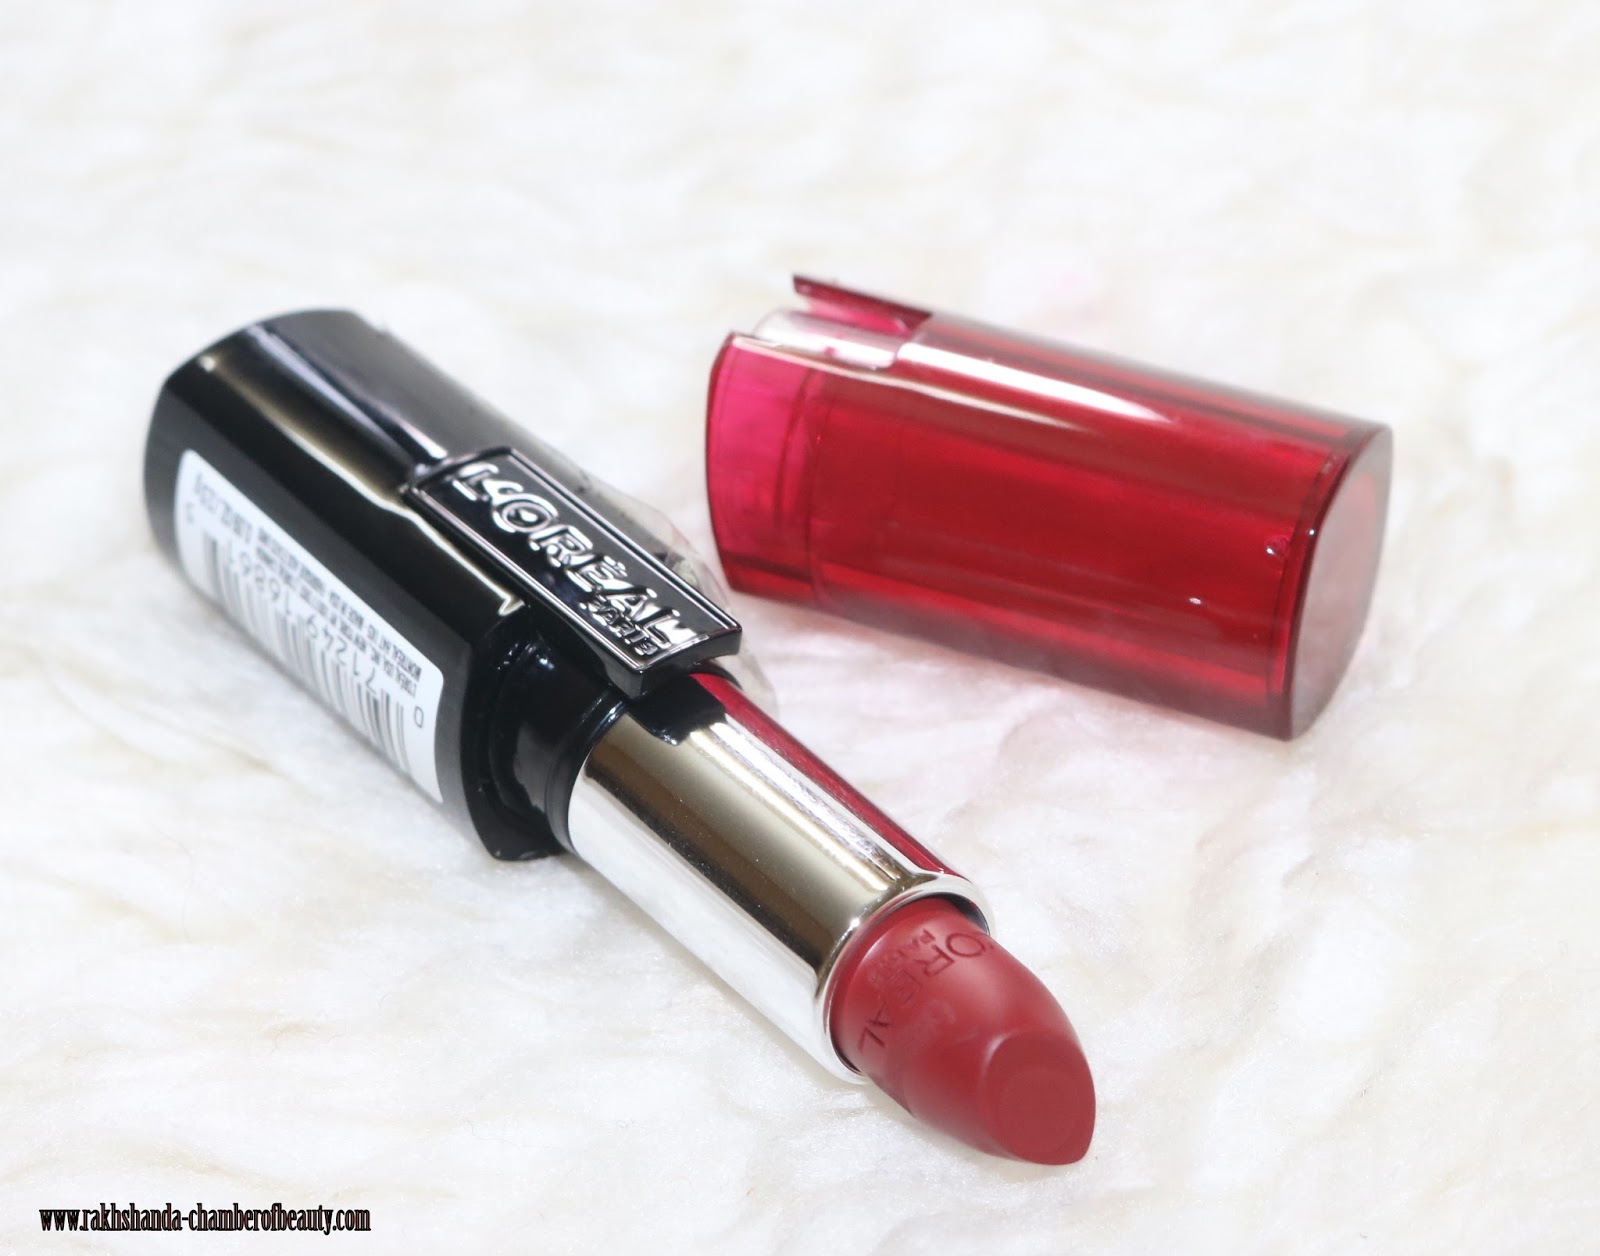 L’Oreal Paris Infallible Lipstick - Persistent Plum Review, swatches & FOTD